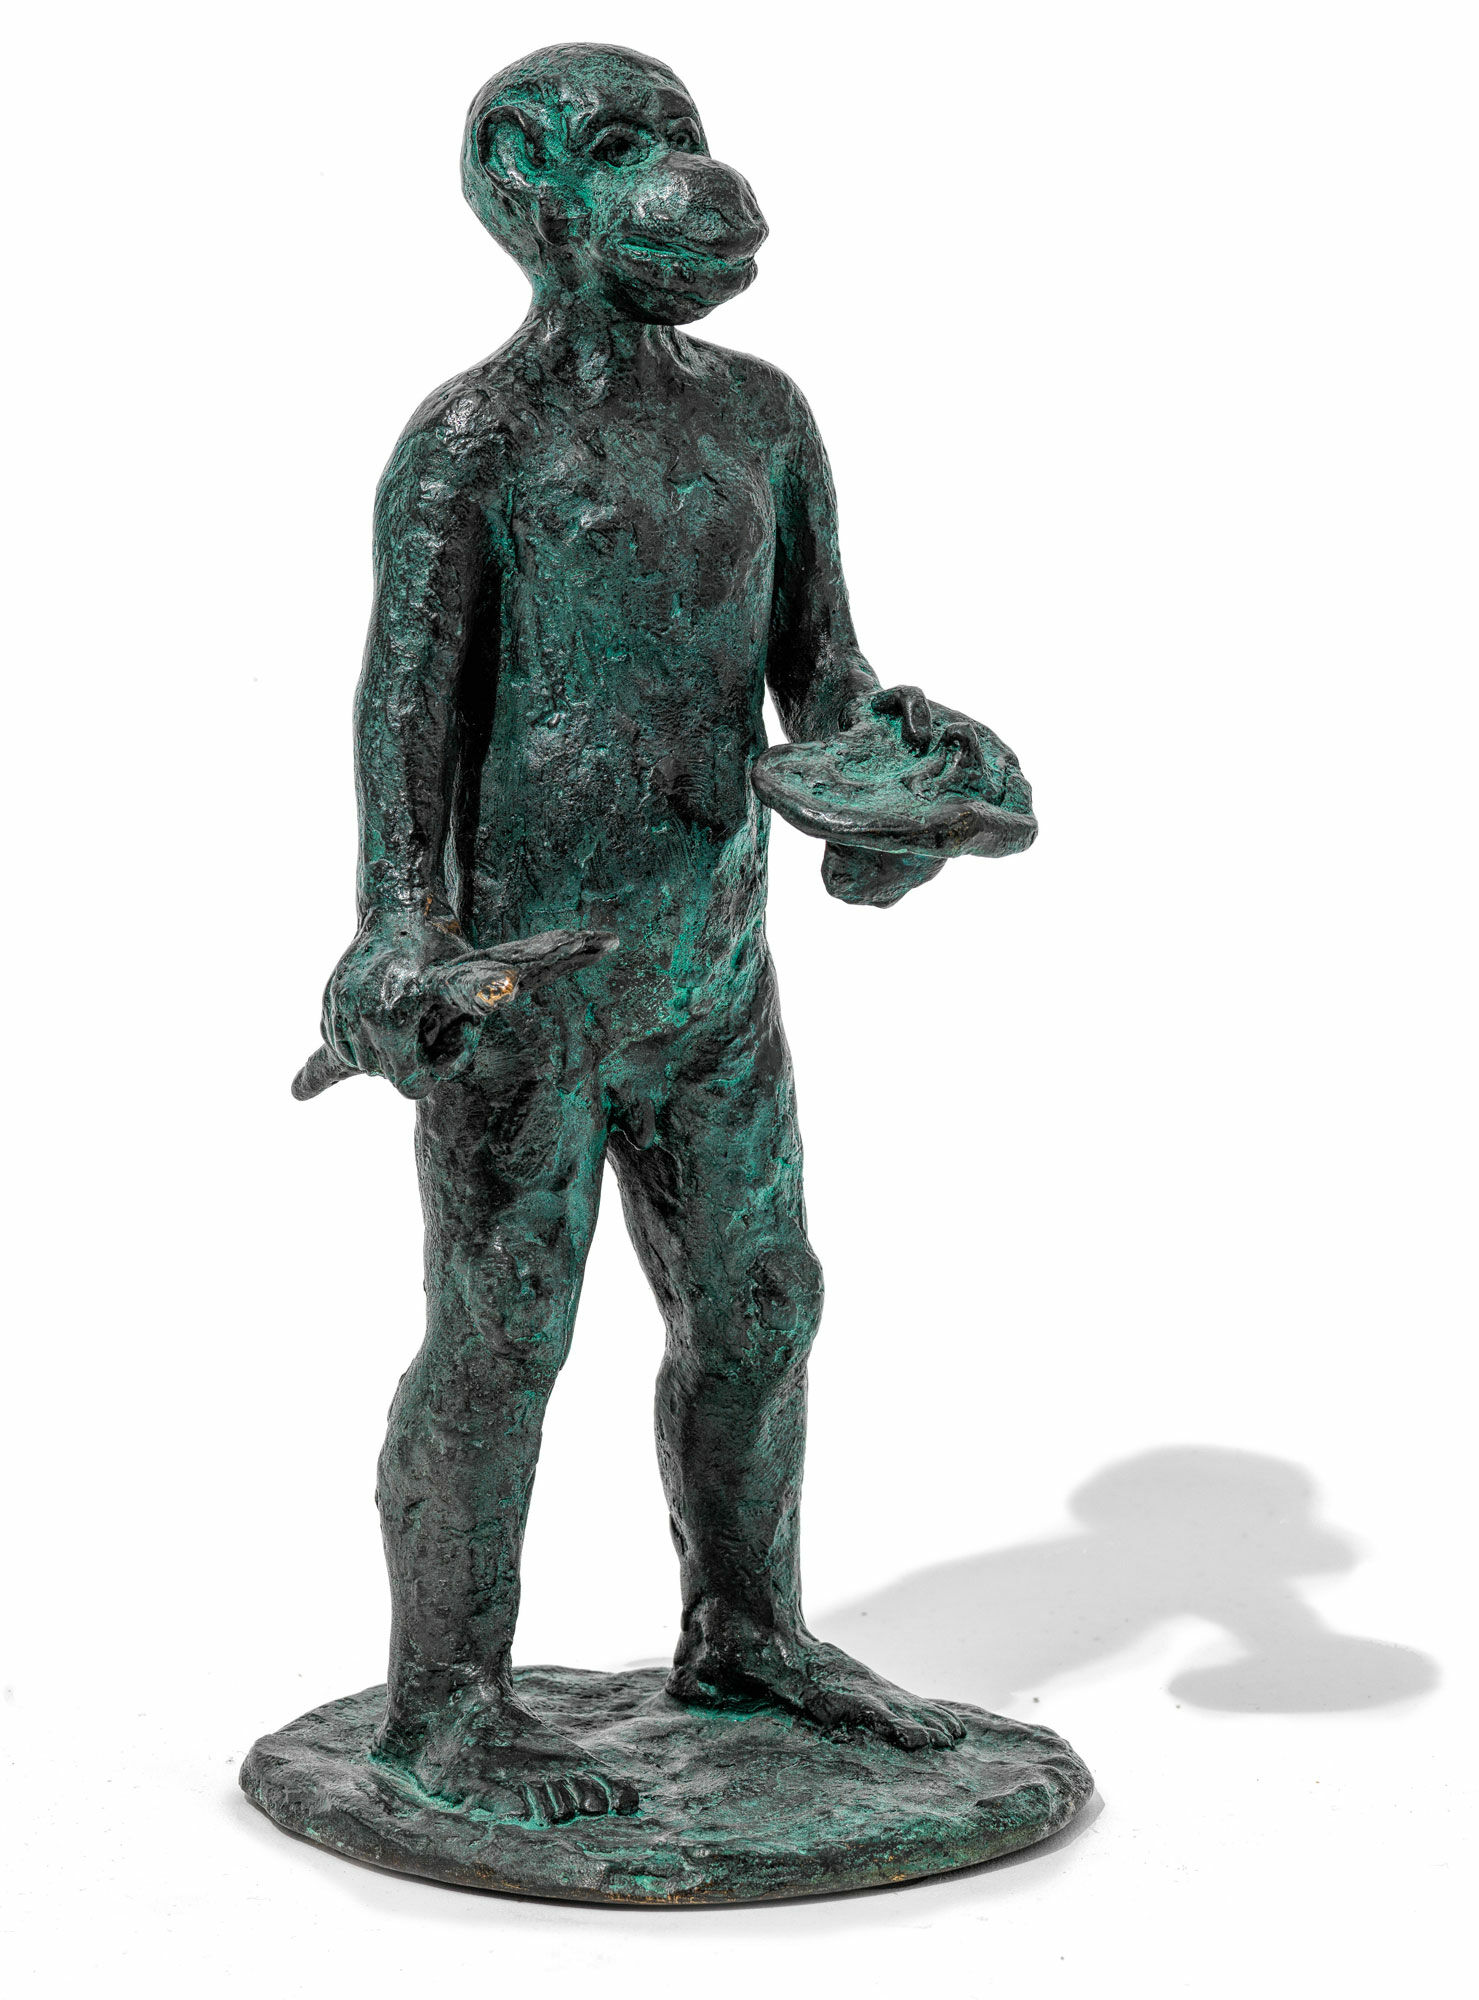 Sculpture "Painters' Tribe" (2002), bronze by Jörg Immendorff